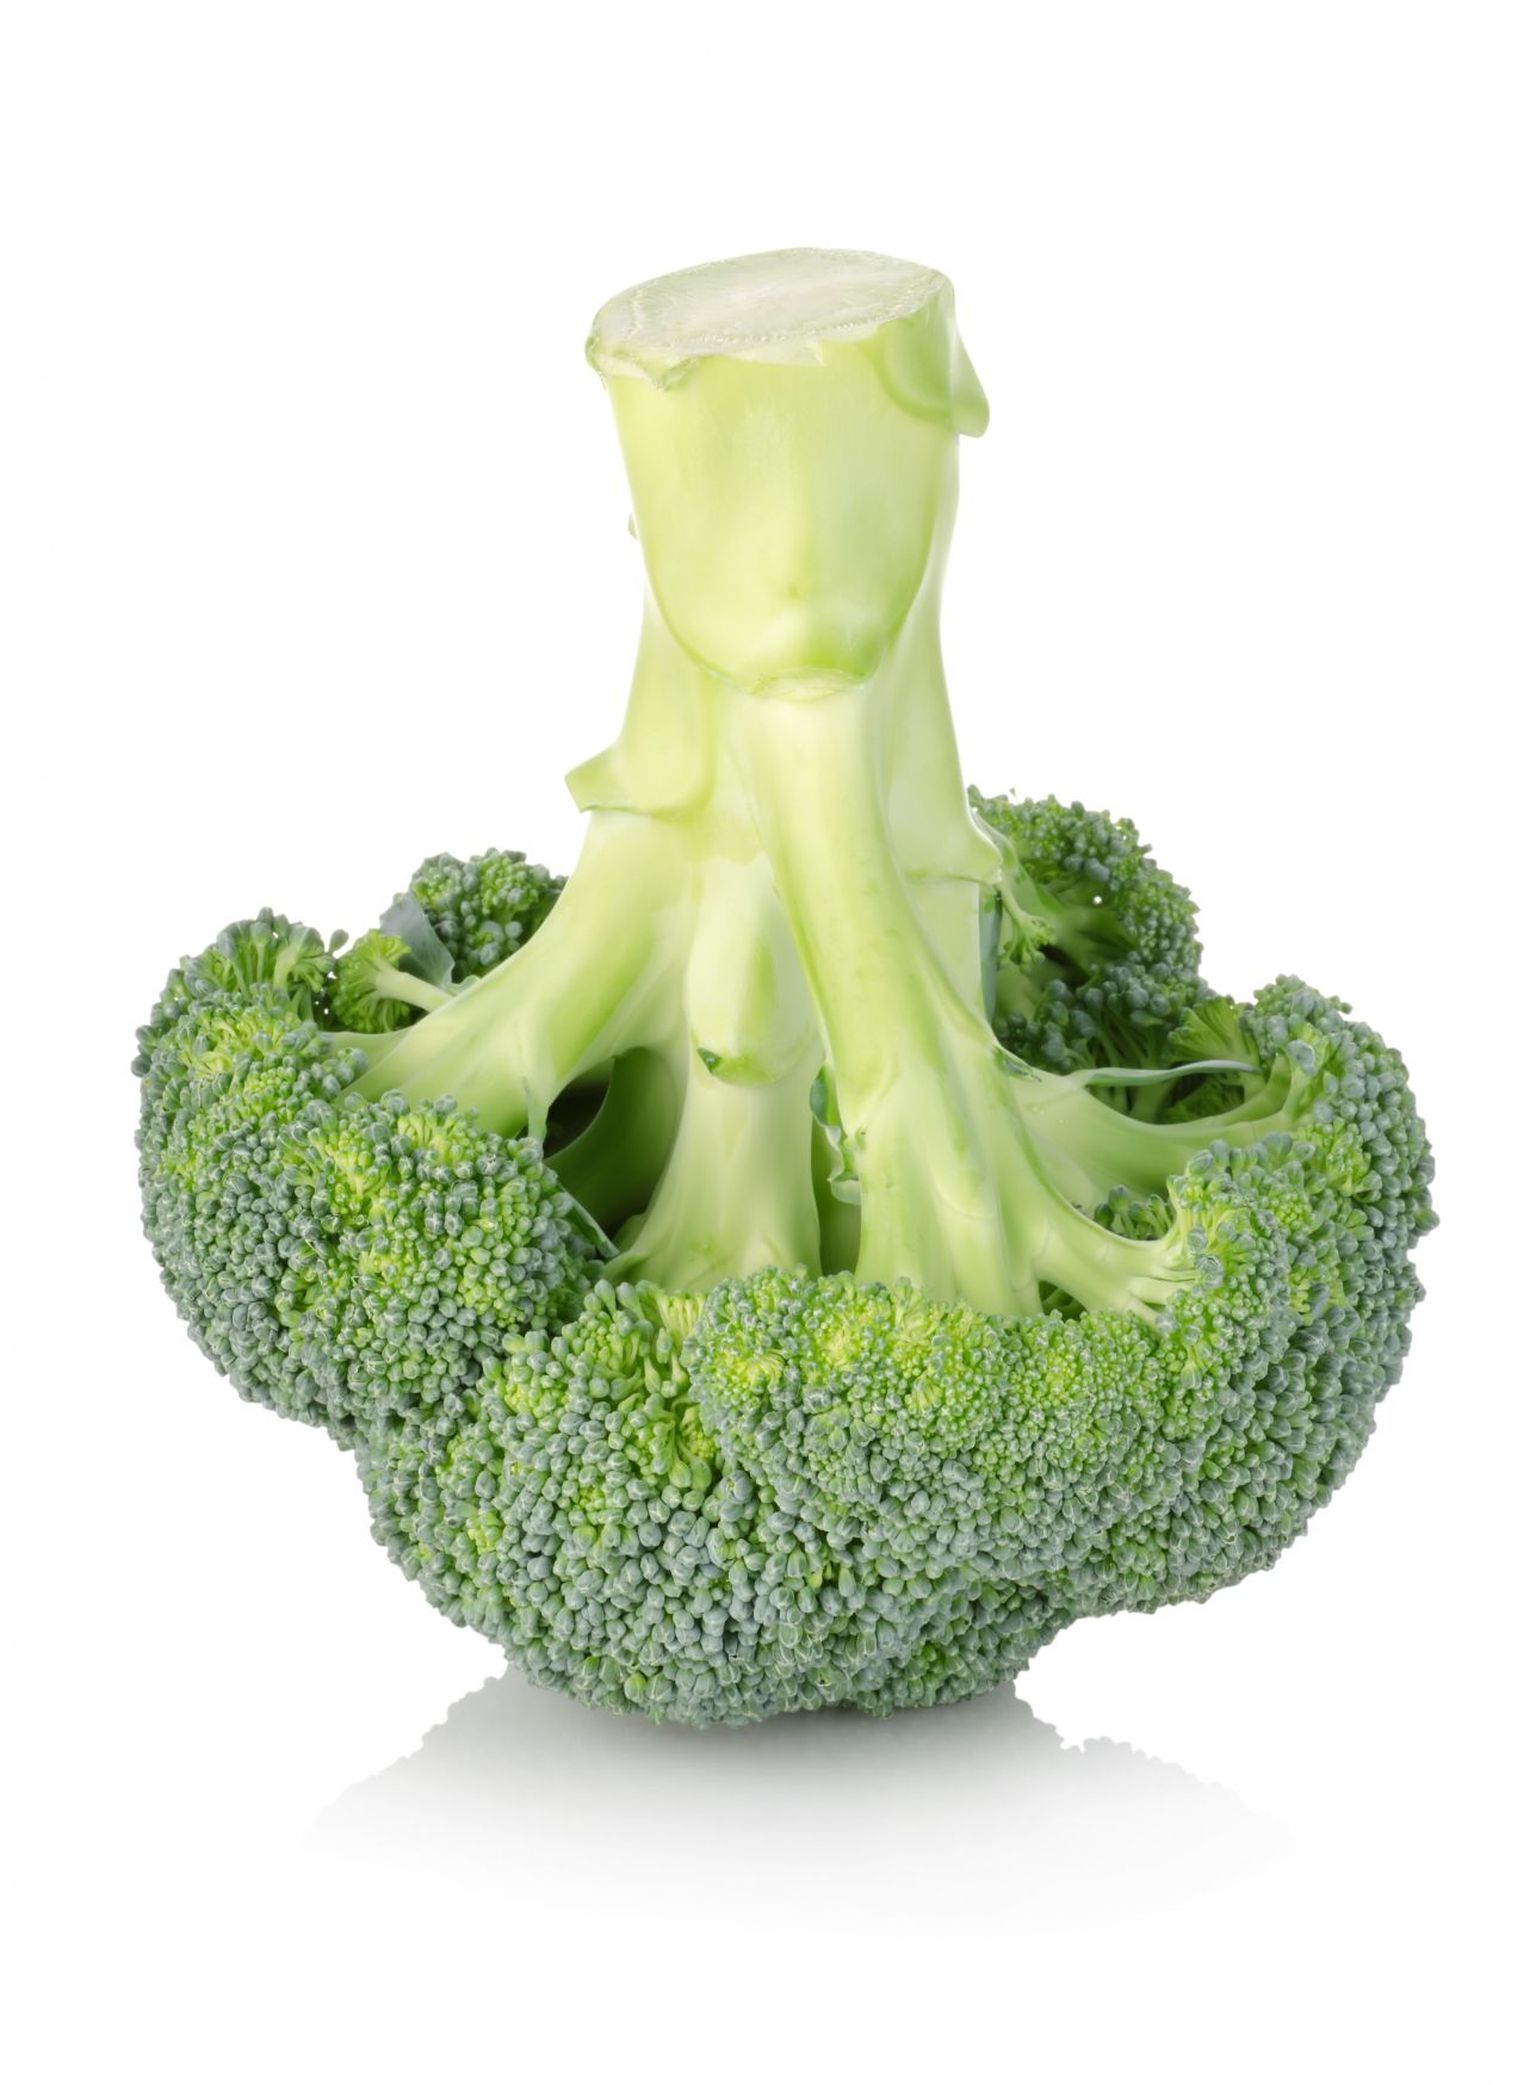 Brokoli sisaldab palju C-vitamiini